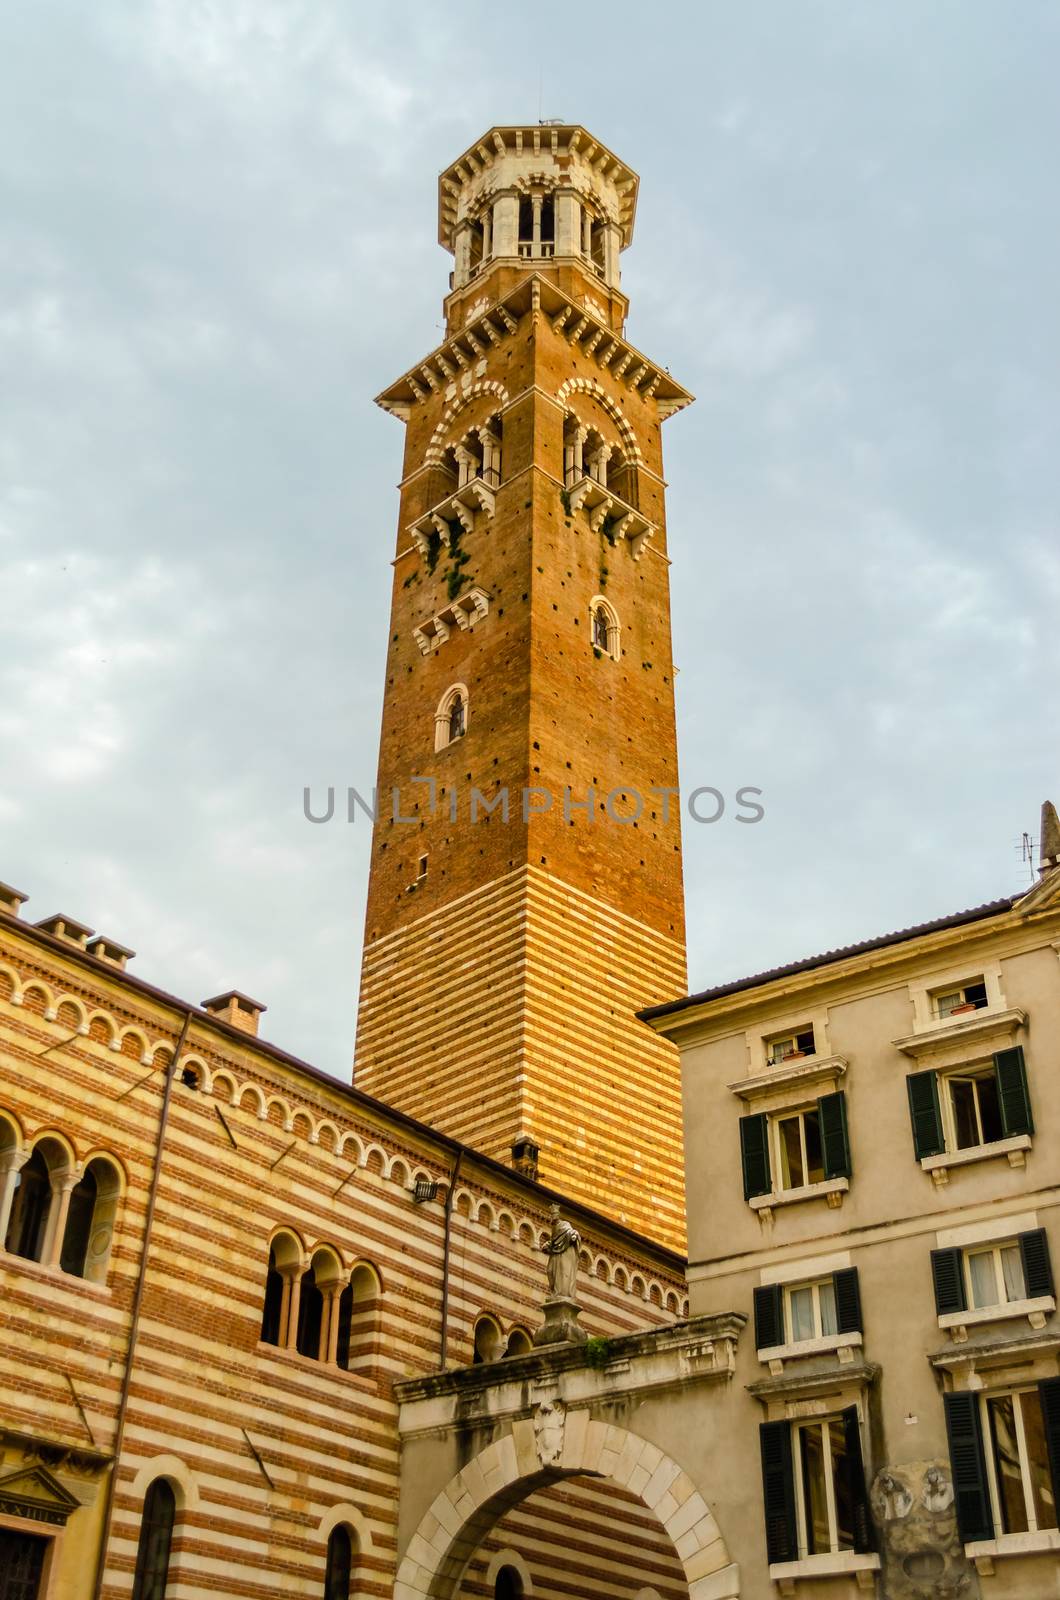 Lamberti Tower in Piazza Signori in Verona, Italy by marcorubino